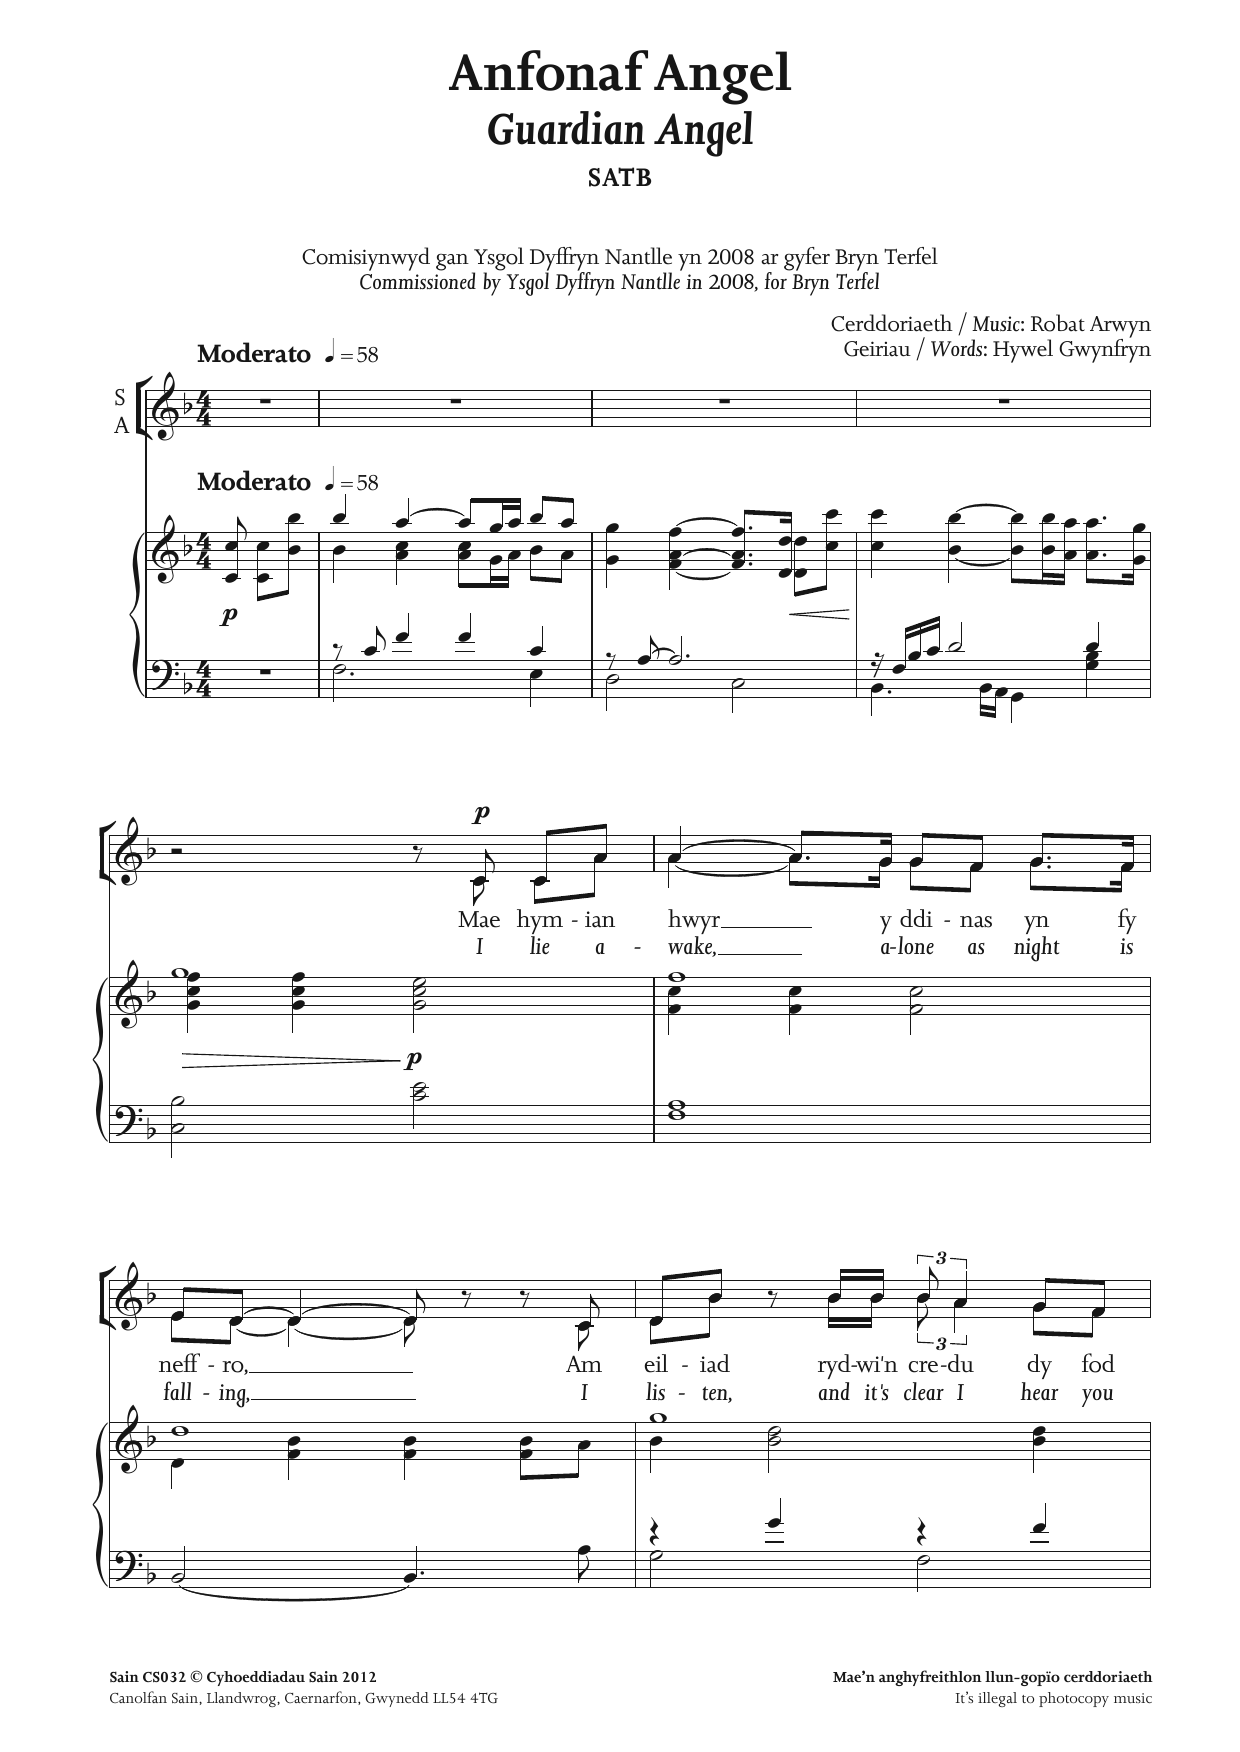 Robat Arwyn Anfonaf Angel (Guardian Angel) Sheet Music Notes & Chords for TTBB - Download or Print PDF